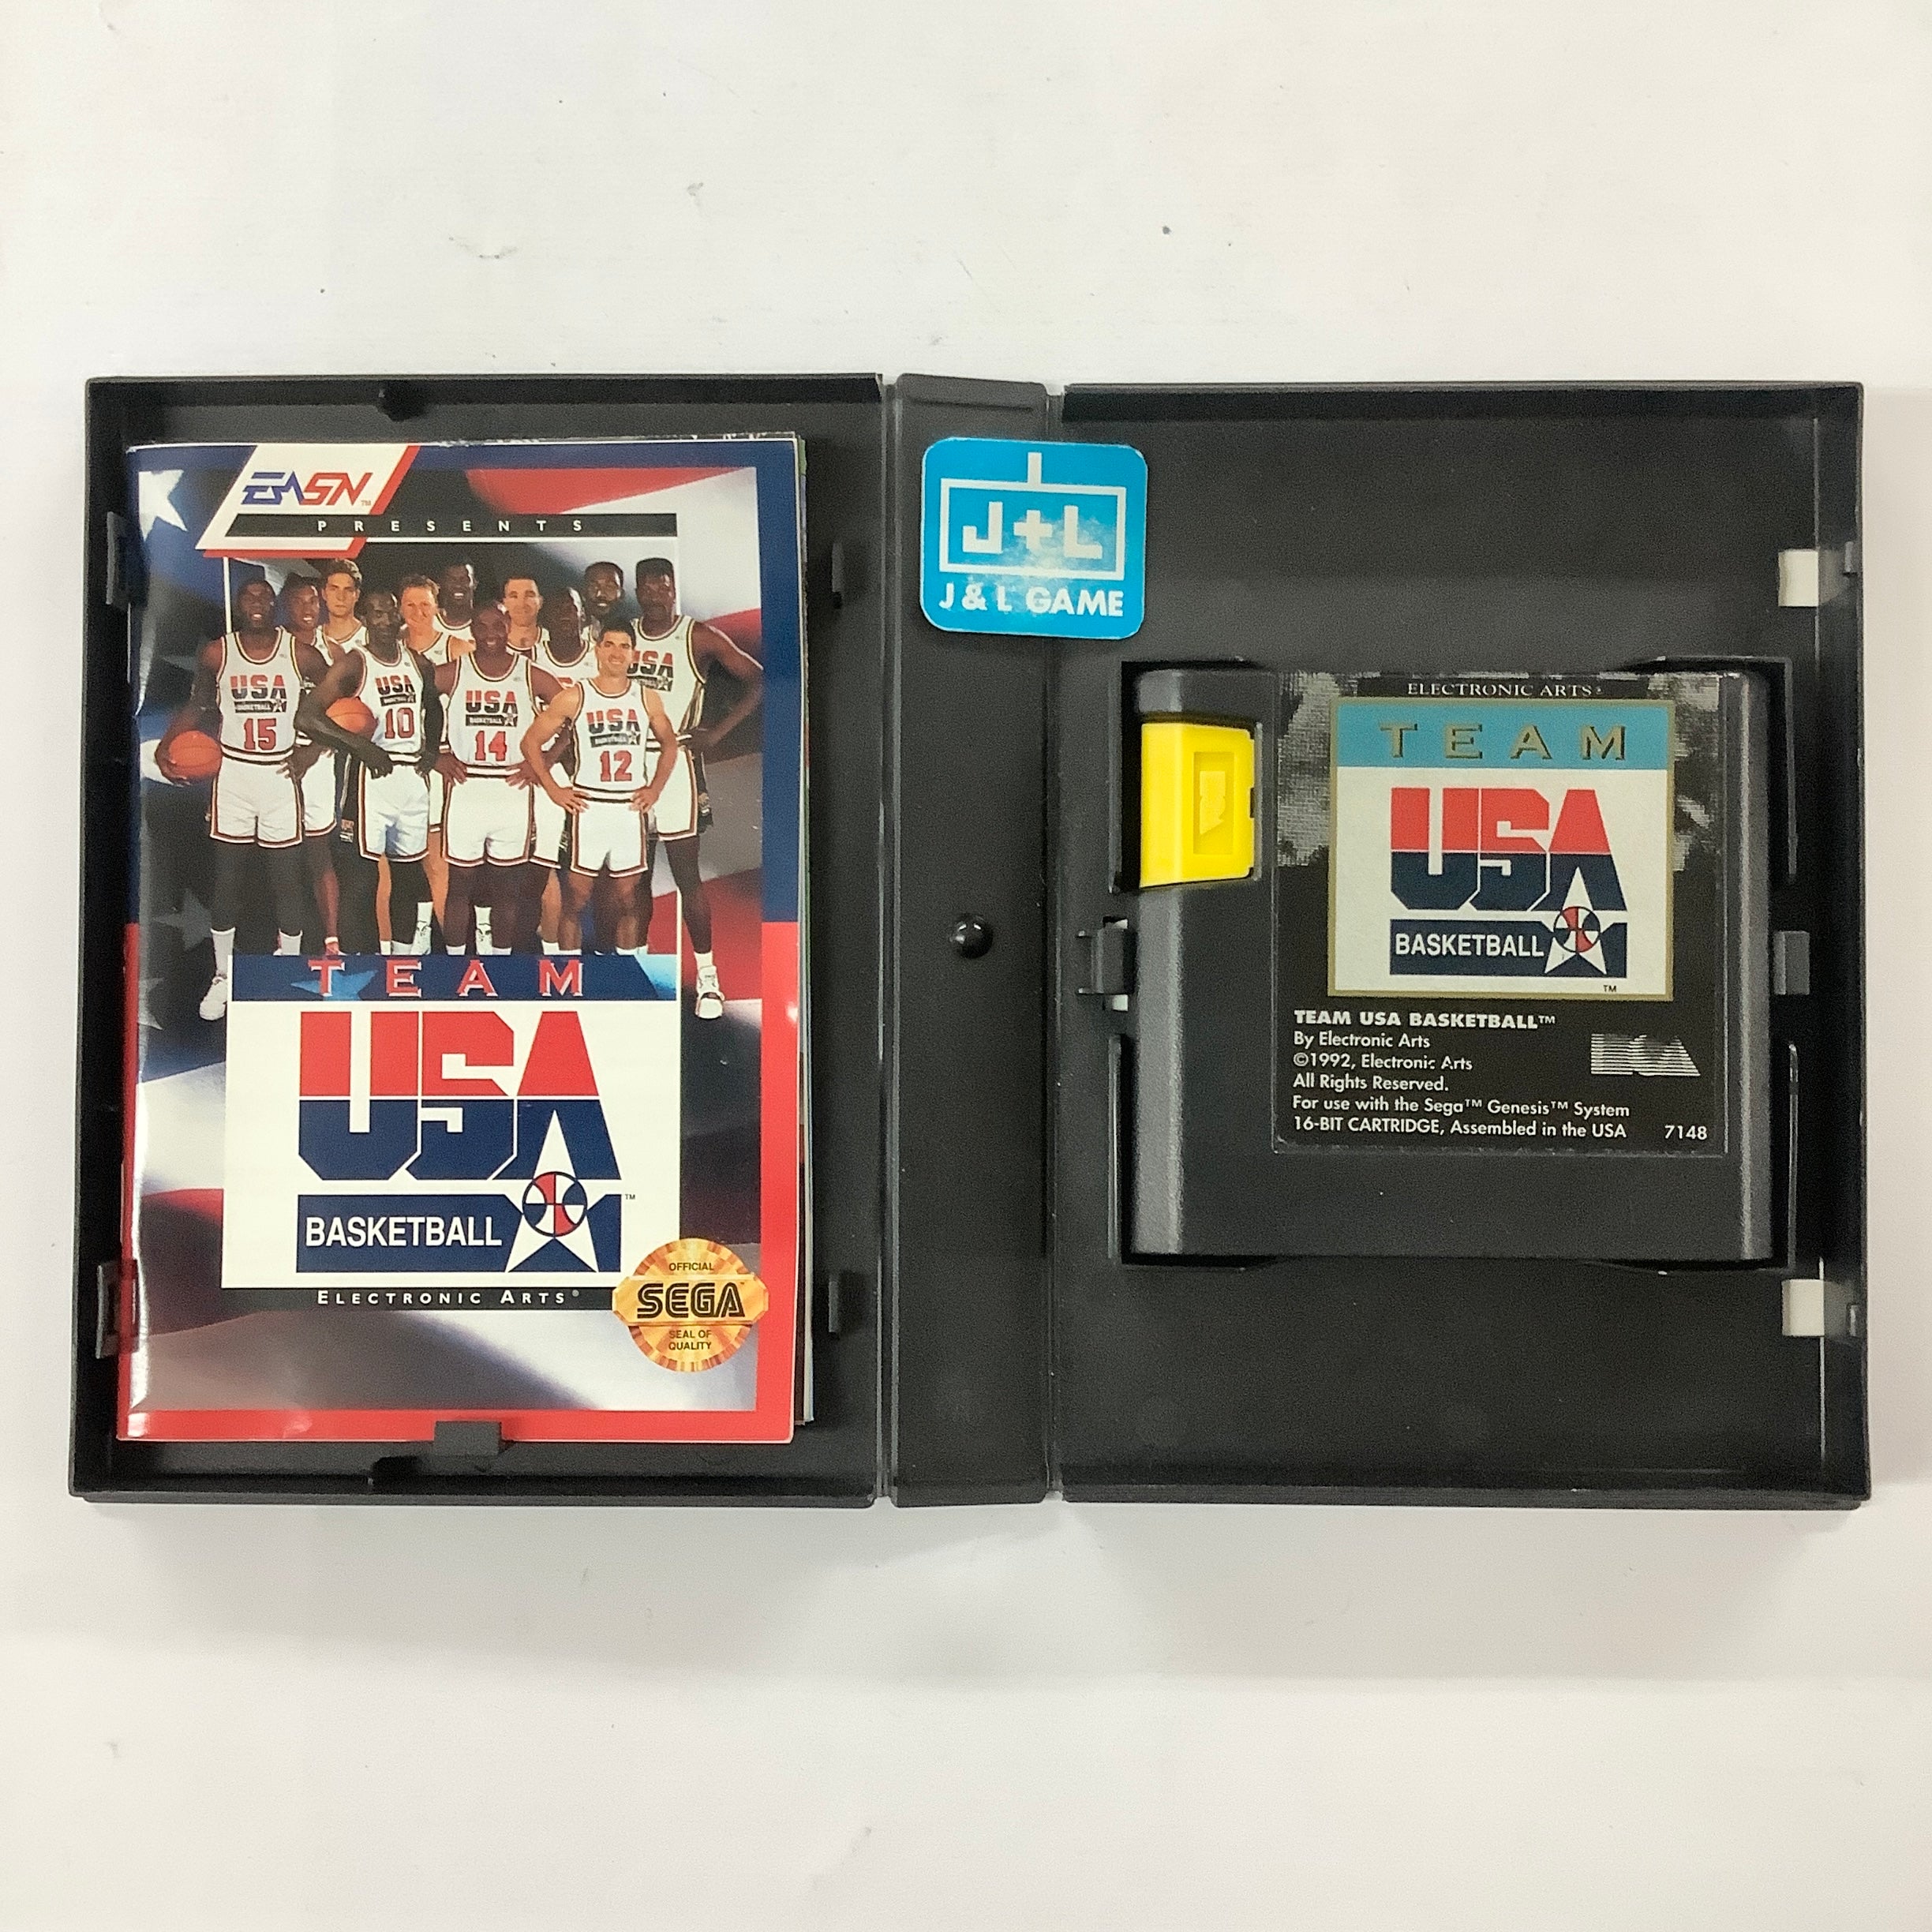 Team USA Basketball - (SG) SEGA Genesis [Pre-Owned] Video Games Electronic Arts   